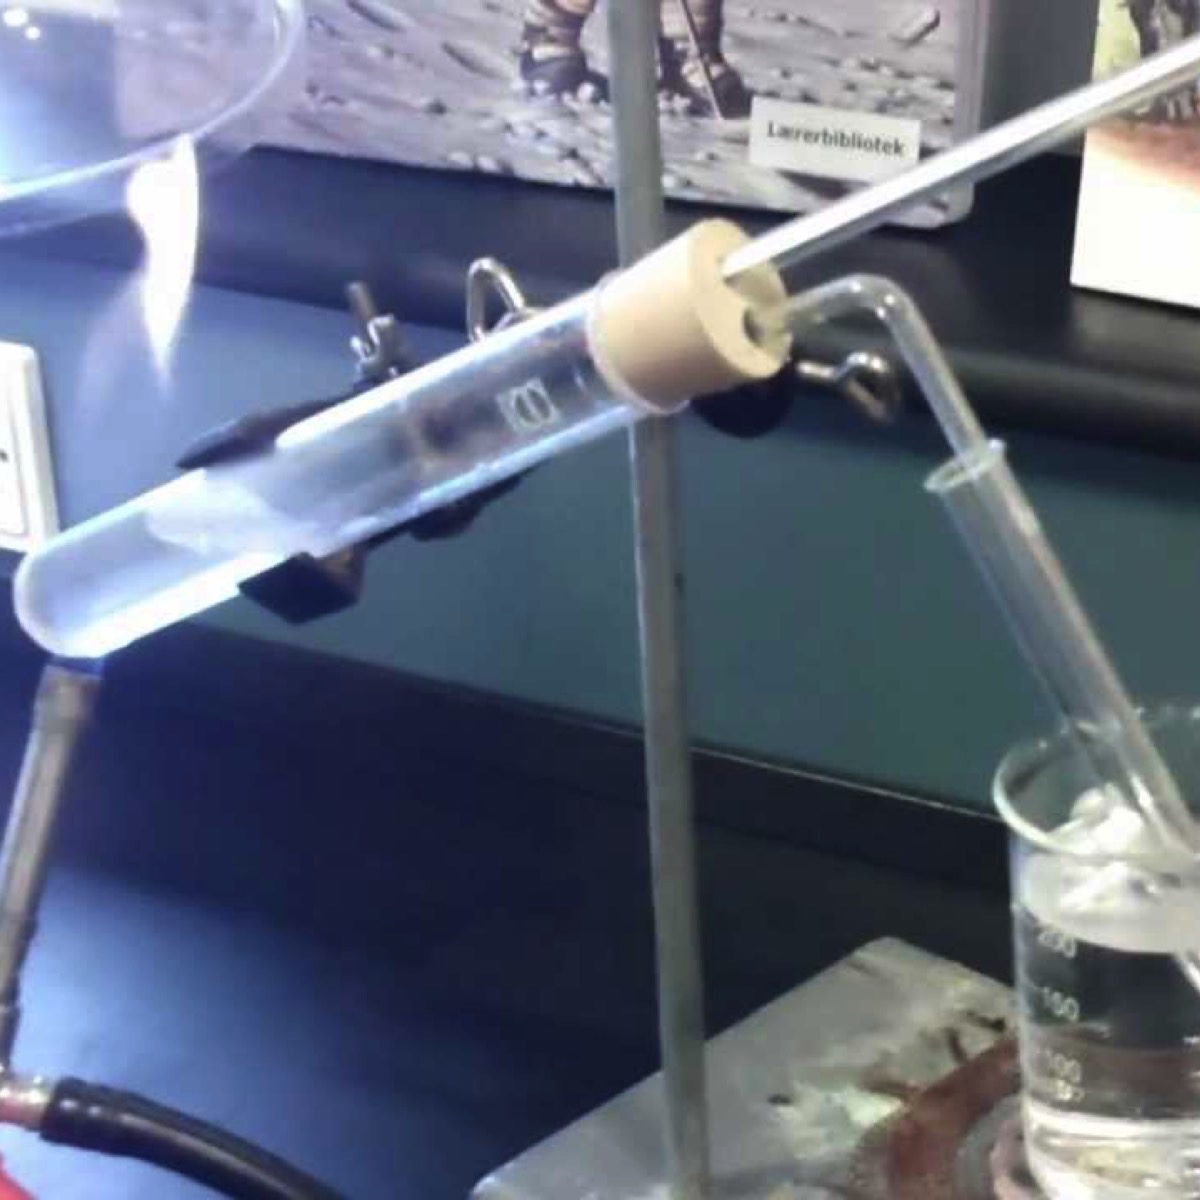 gsk - fysik kemi - destillation